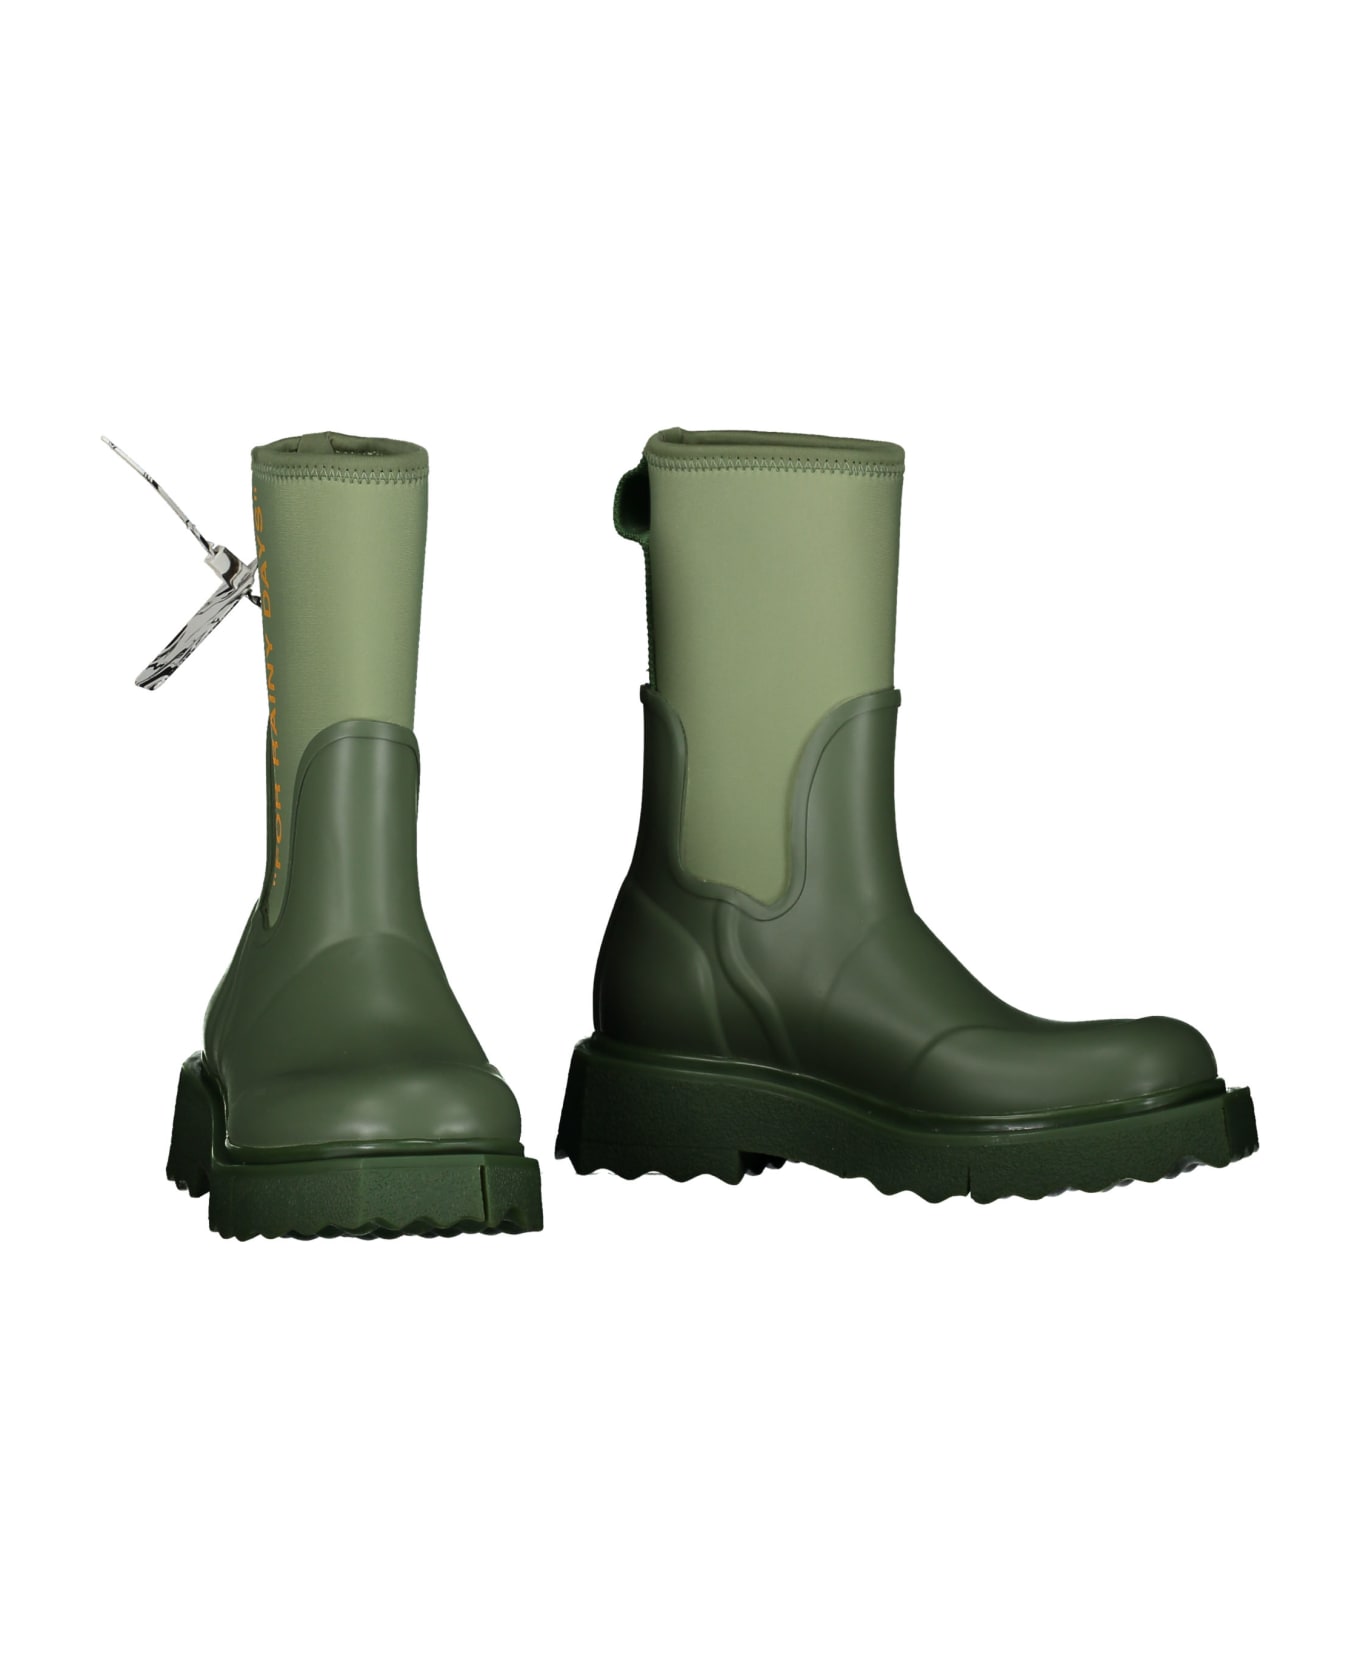 Off-White Rubber And Neoprene Rain Boots - green ブーツ